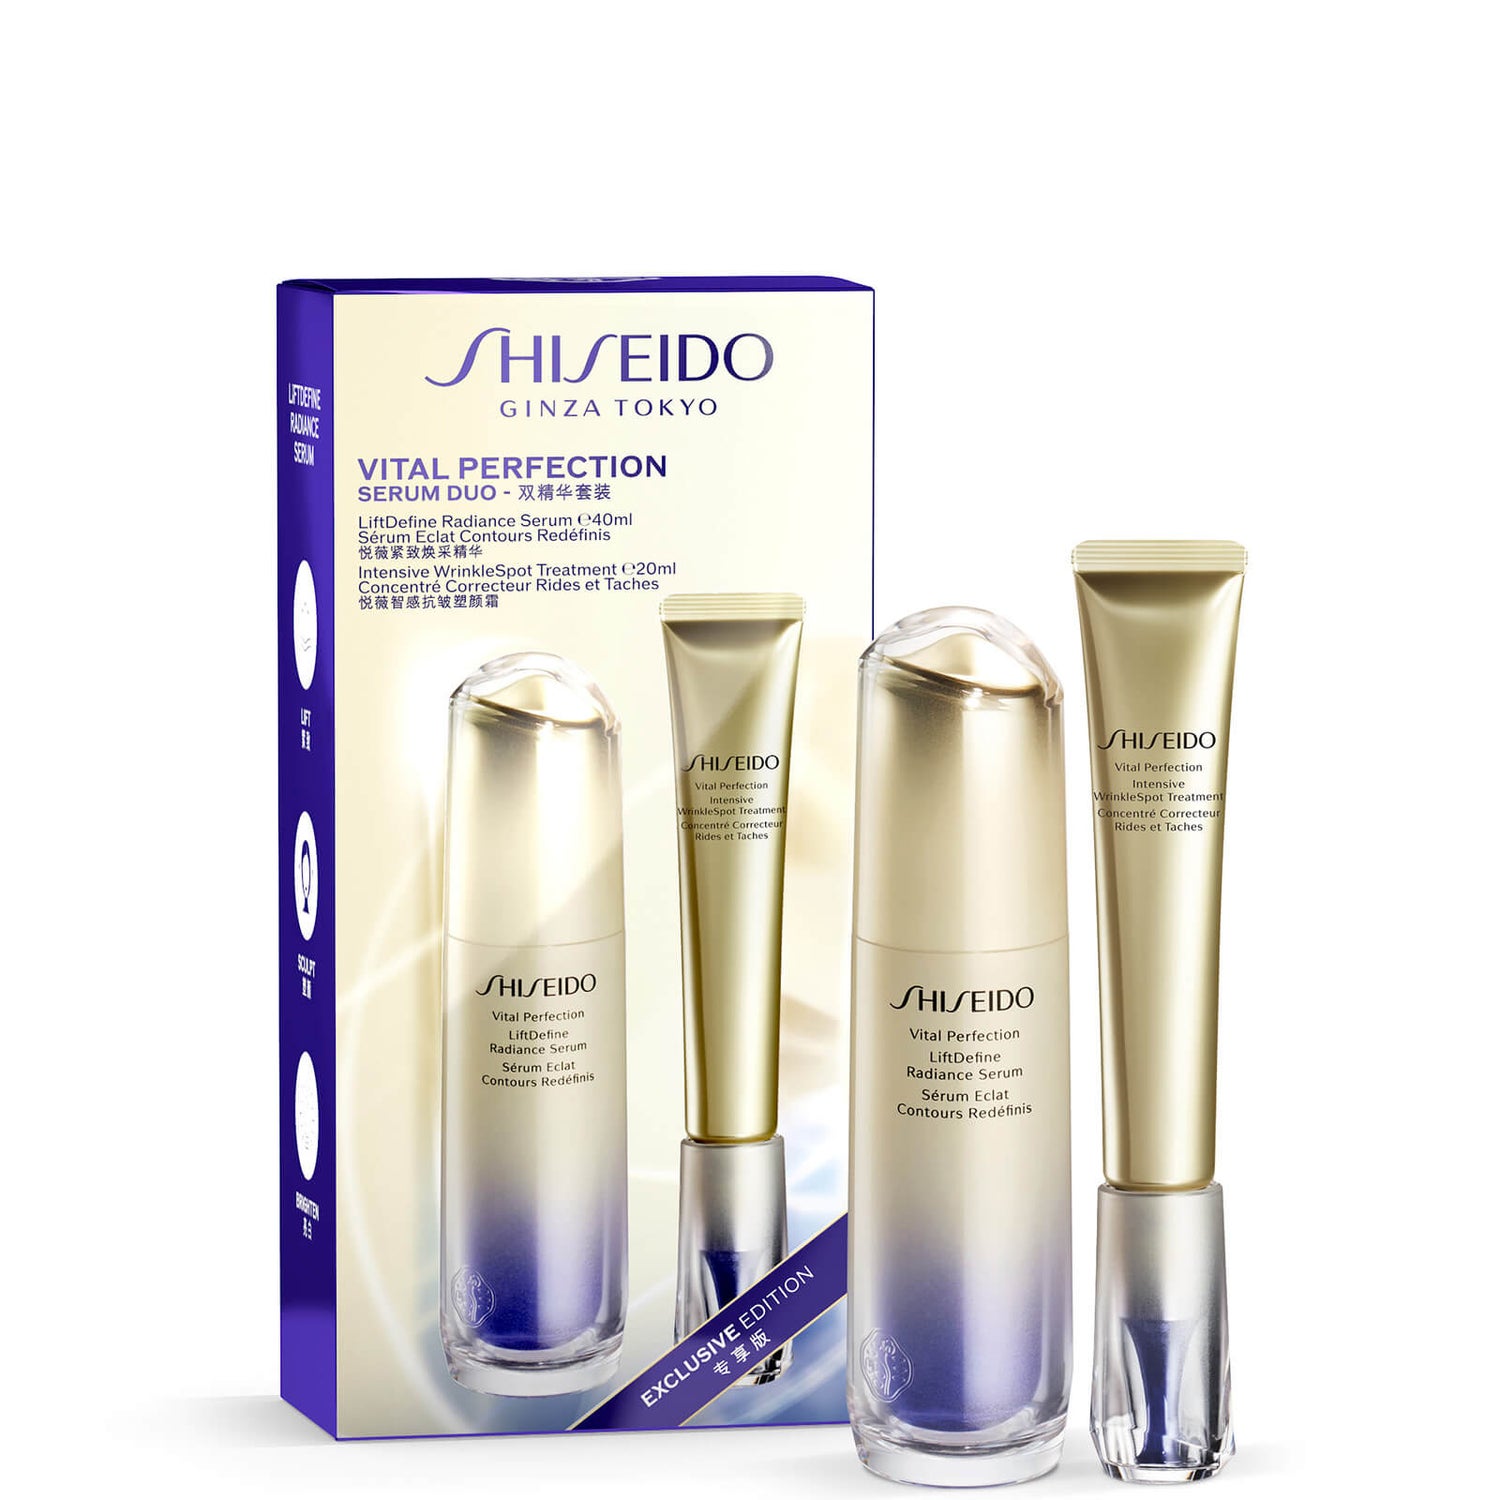 Ensemble exclusif Shiseido Vital Perfection Bestseller